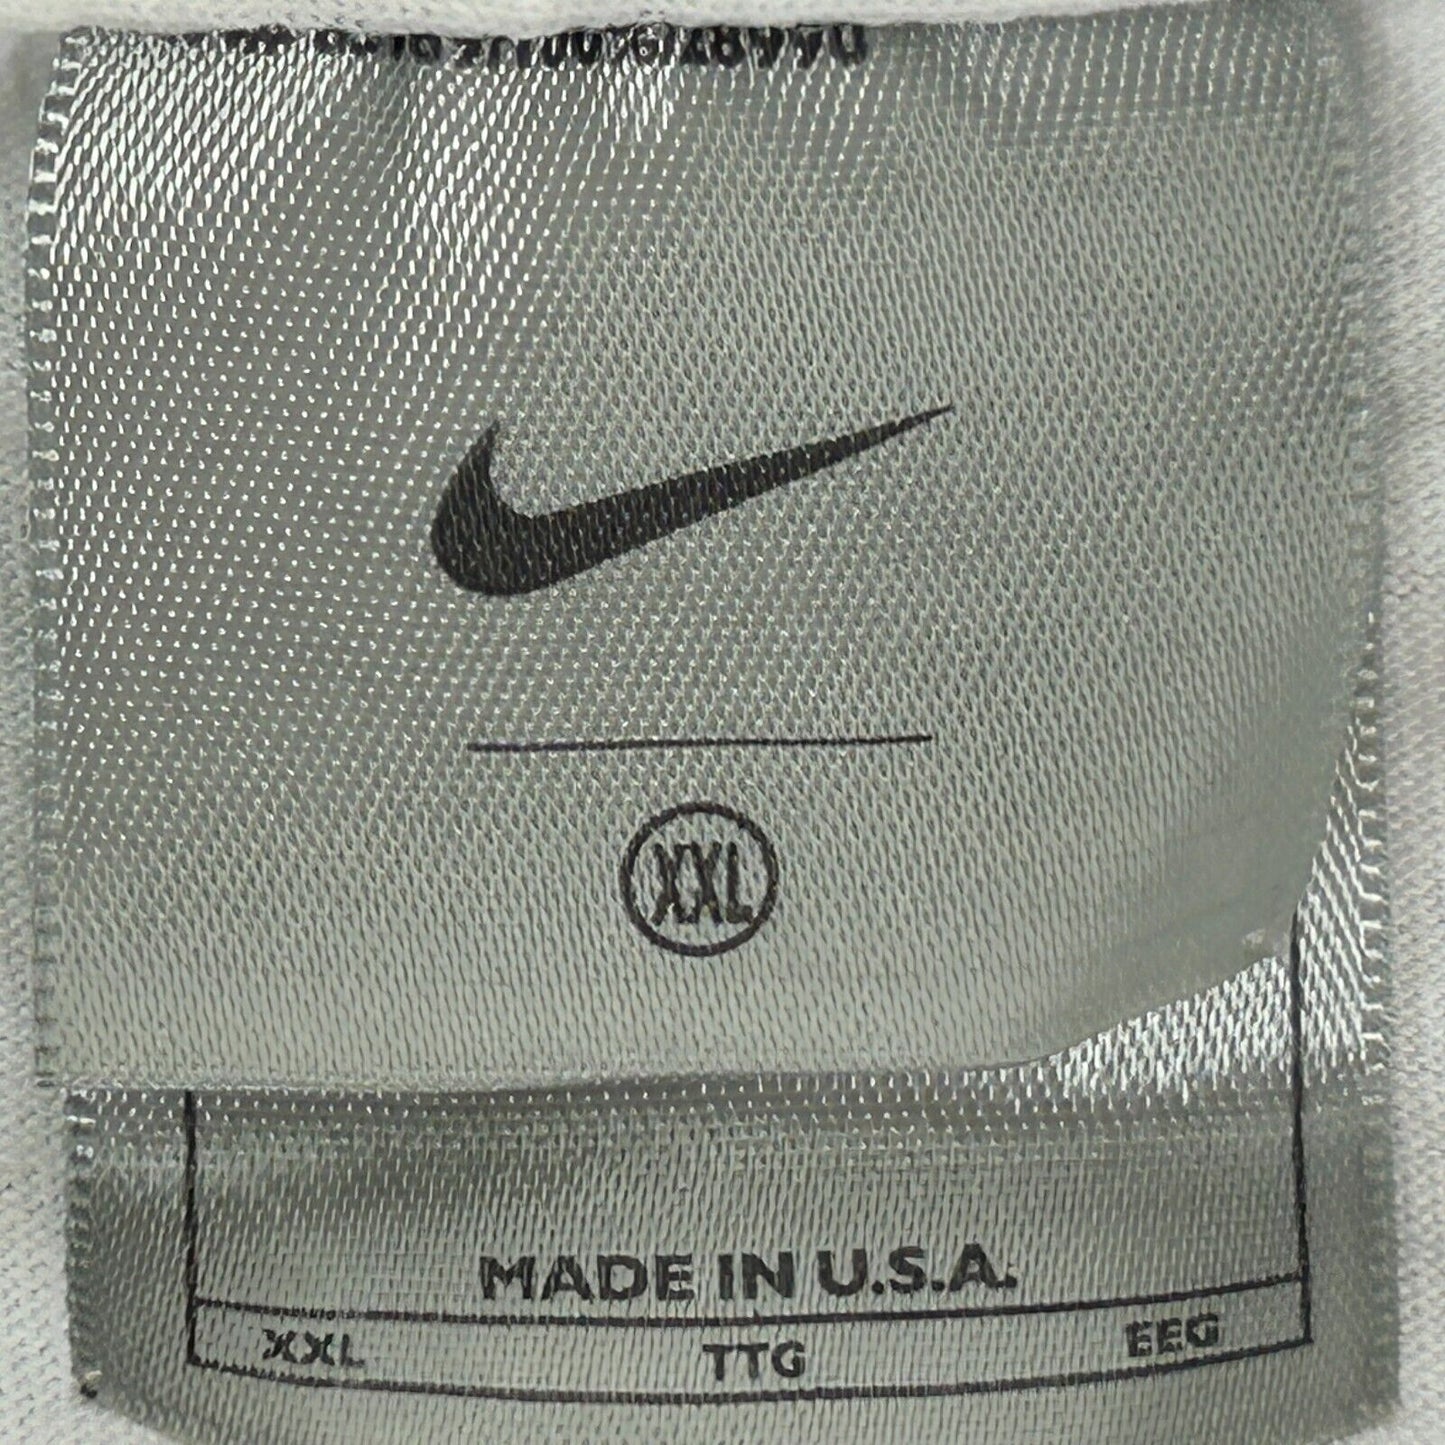 Nike 2001 Las Vegas Marathon Vintage Y2Ks T Shirt Running Runner Made In USA 2XL